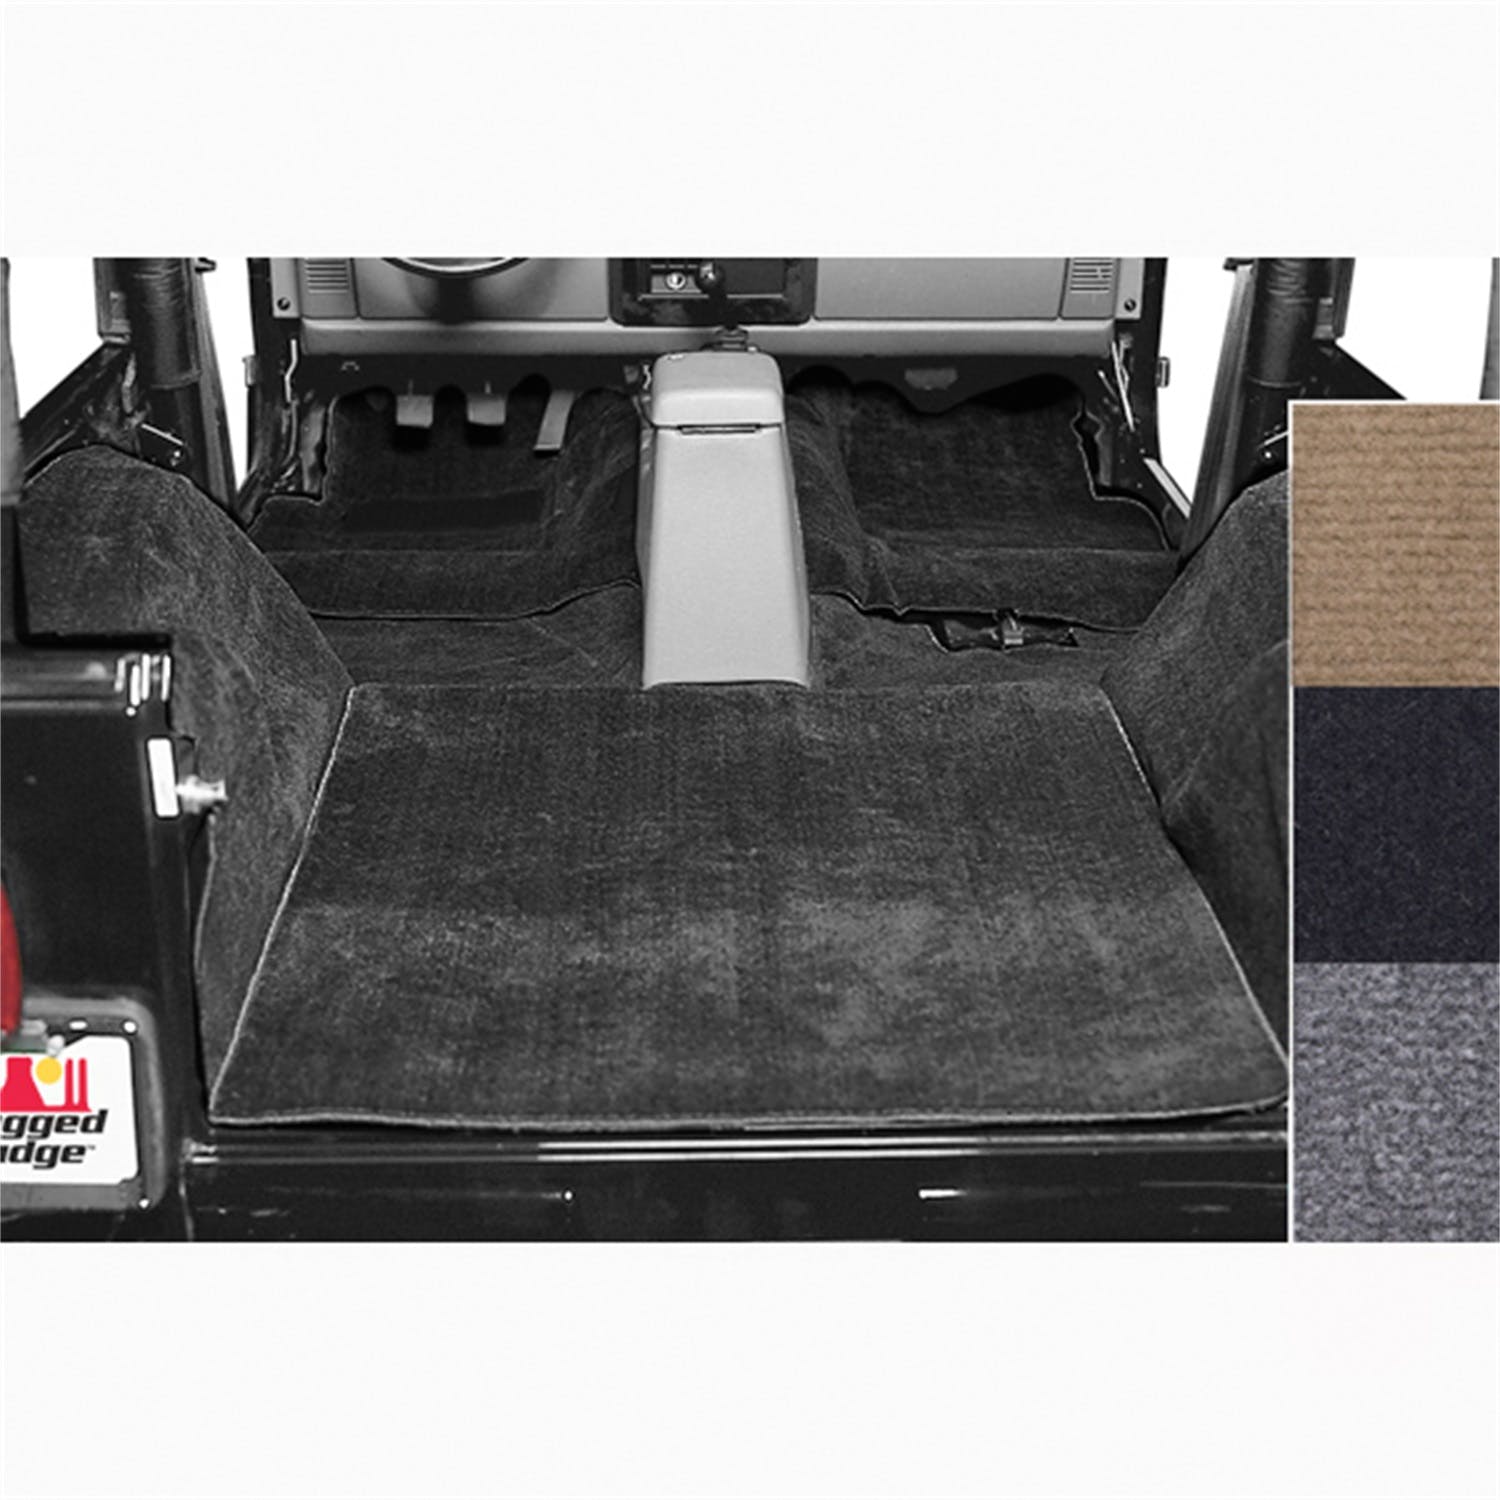 Rugged Ridge 13690.01 Deluxe Carpet Kit, Black